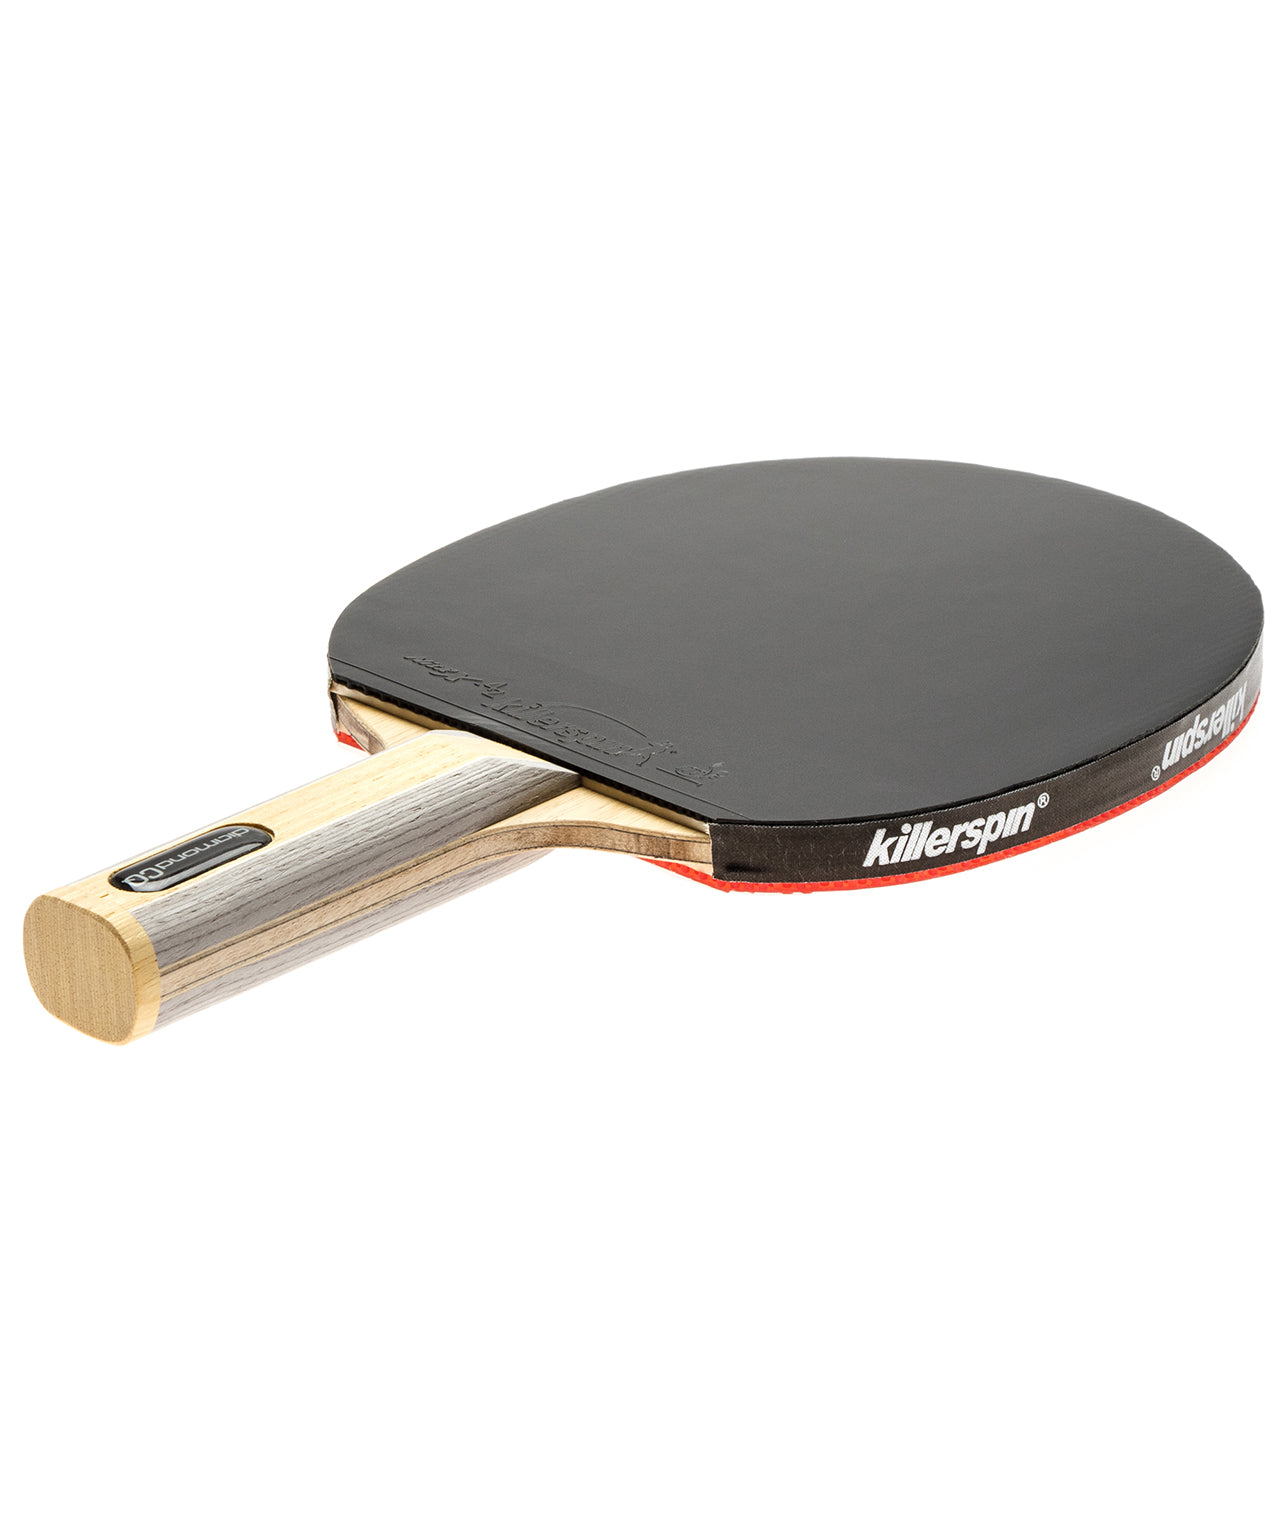 Killerspin Ping Pong Paddle Diamond CQ - Srait Handle Black Rubber